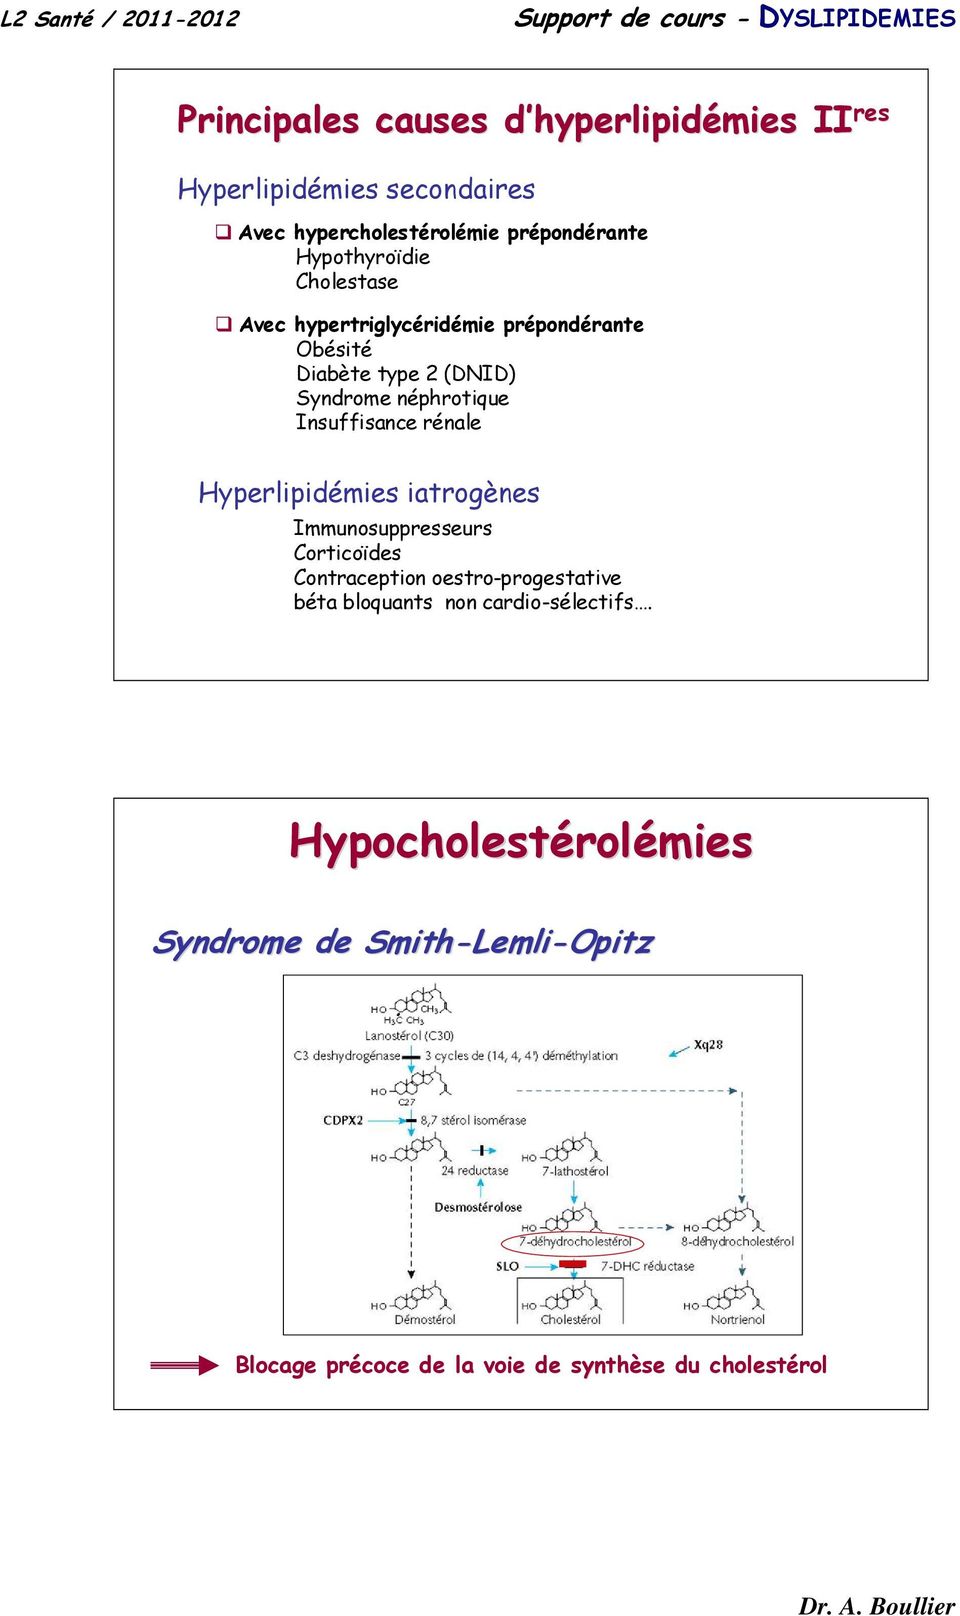 Insuffisance rénale II res Hyperlipidémies iatrogènes Immunosuppresseurs Corticoïdes Contraception oestro-progestative béta